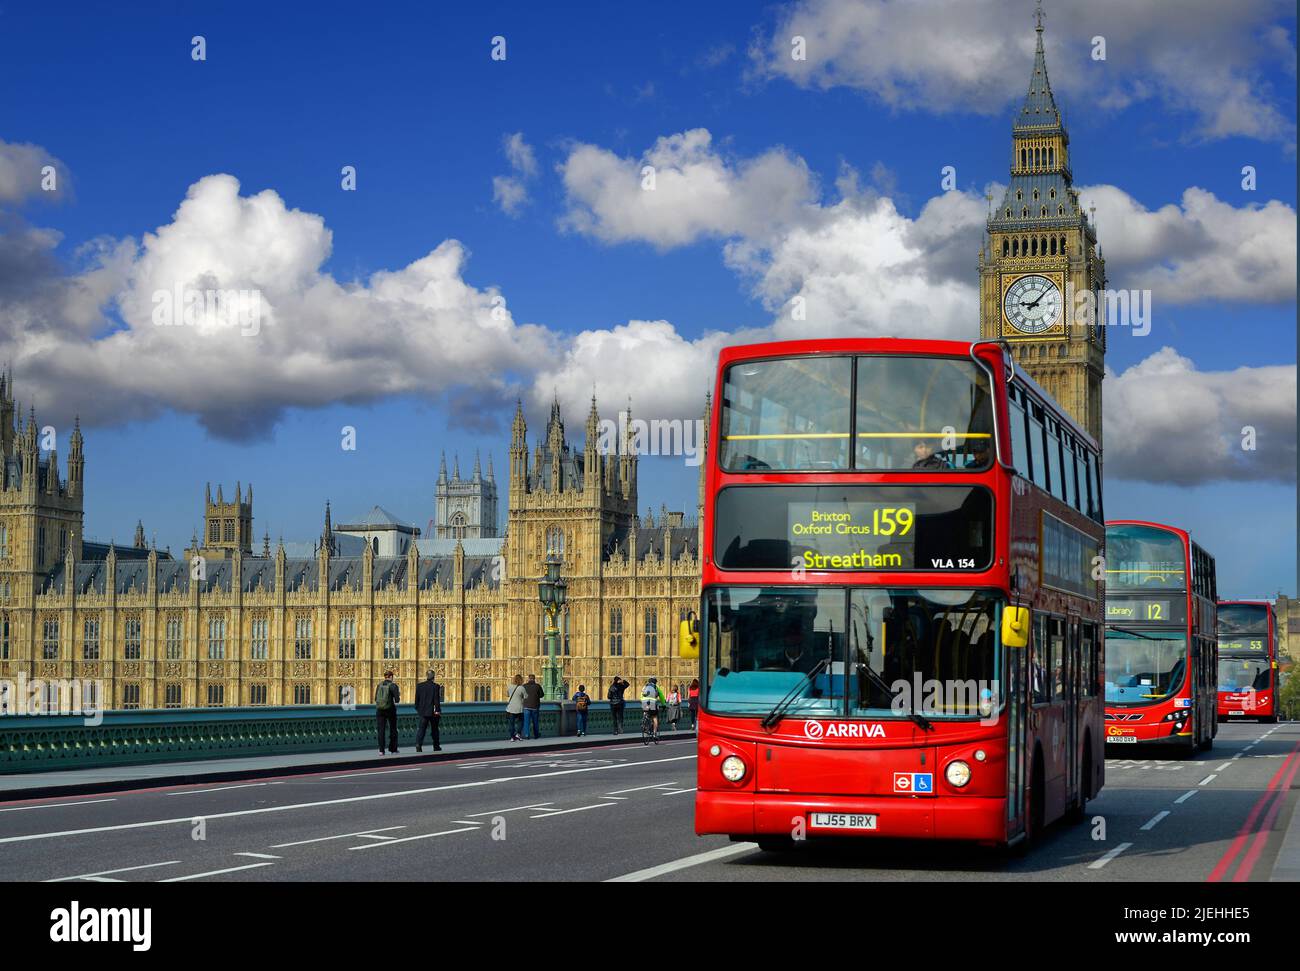 Dopprote peldeccurbusse auf Westminster Bridge mit Big Ben oder Elizabeth Tower, Palace of Westminster oder Houses of Parliament, UNESCO Weltkulturerbe Banque D'Images